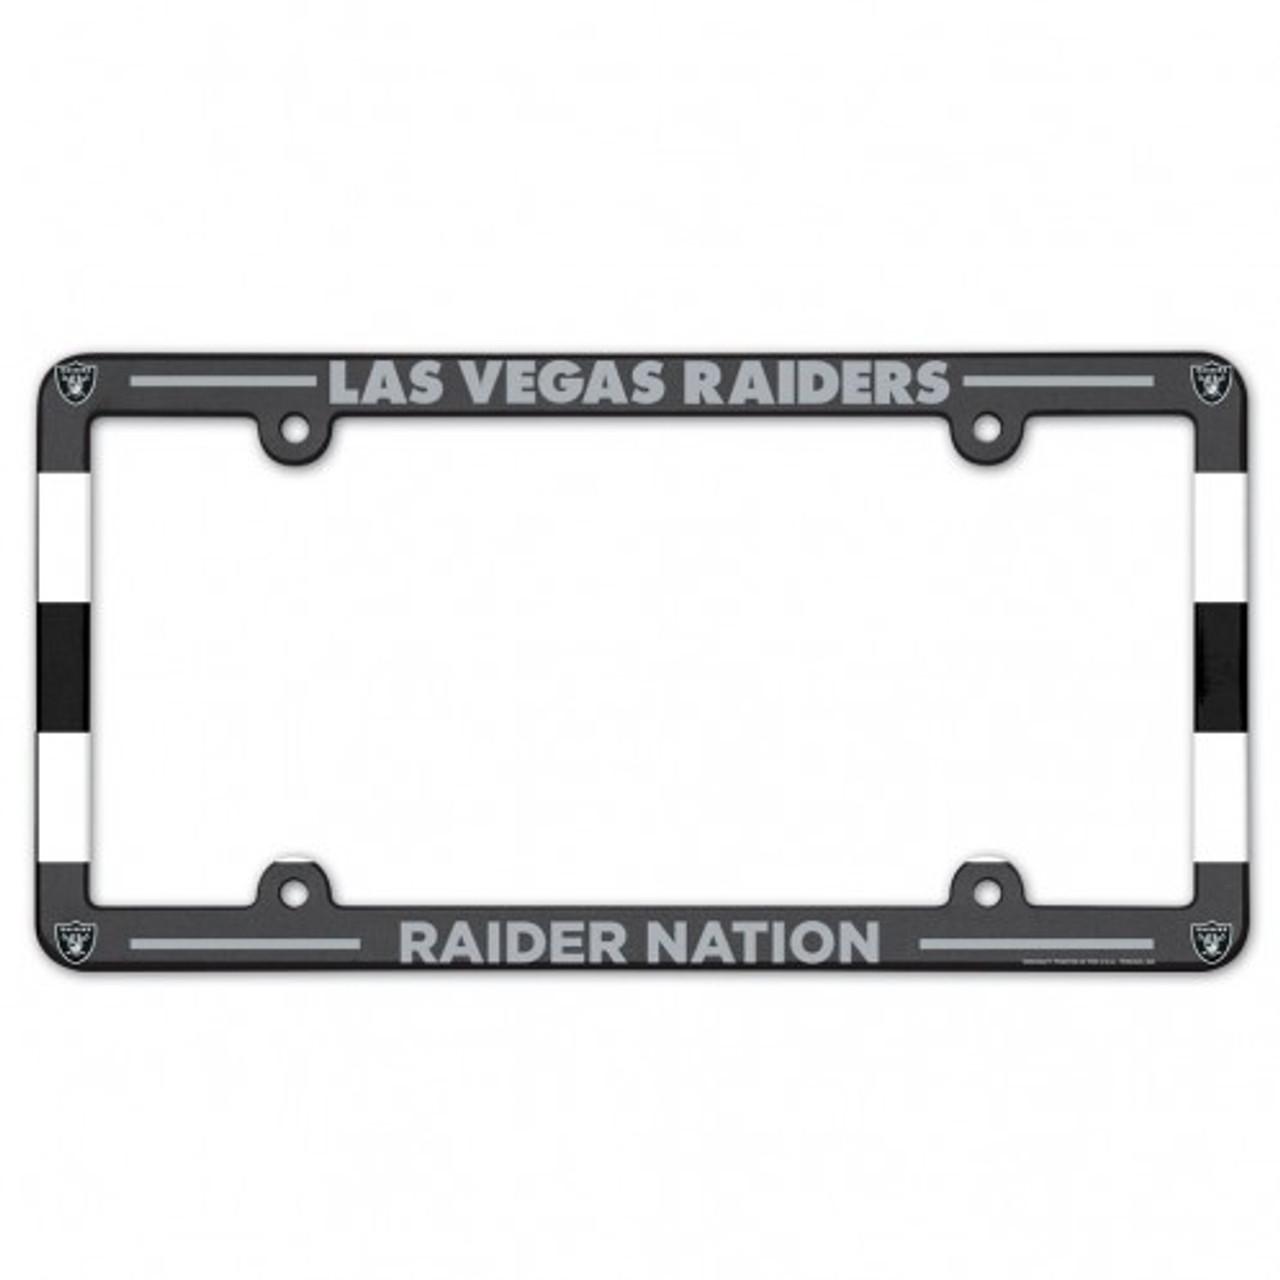 Fanmats Las Vegas Raiders License Plate Frame - Black